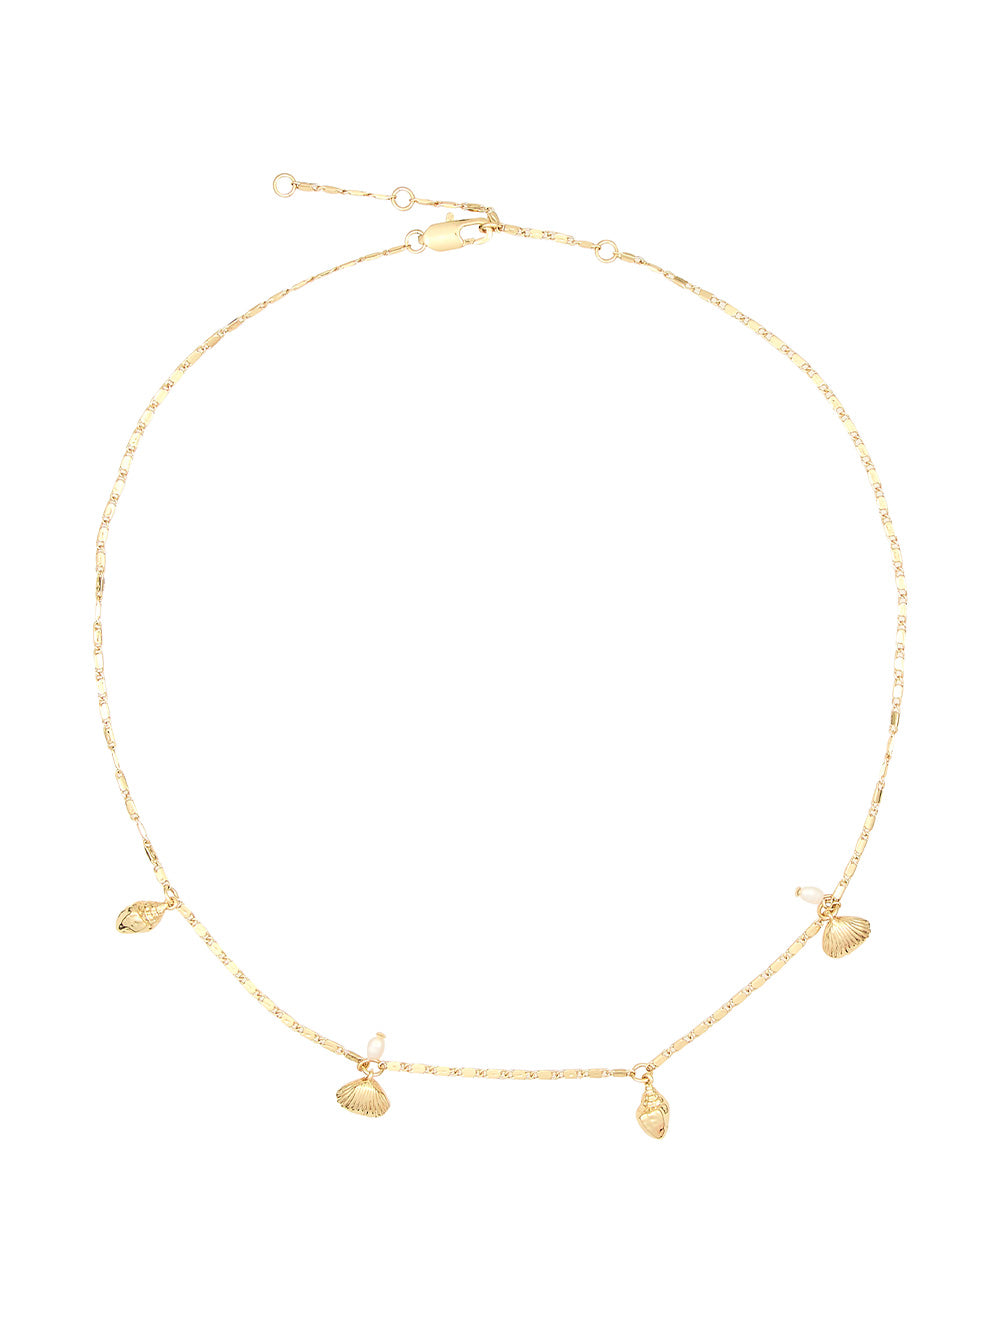 Thalassa Necklace KIVARI - Gold shell studs on gold chain necklace